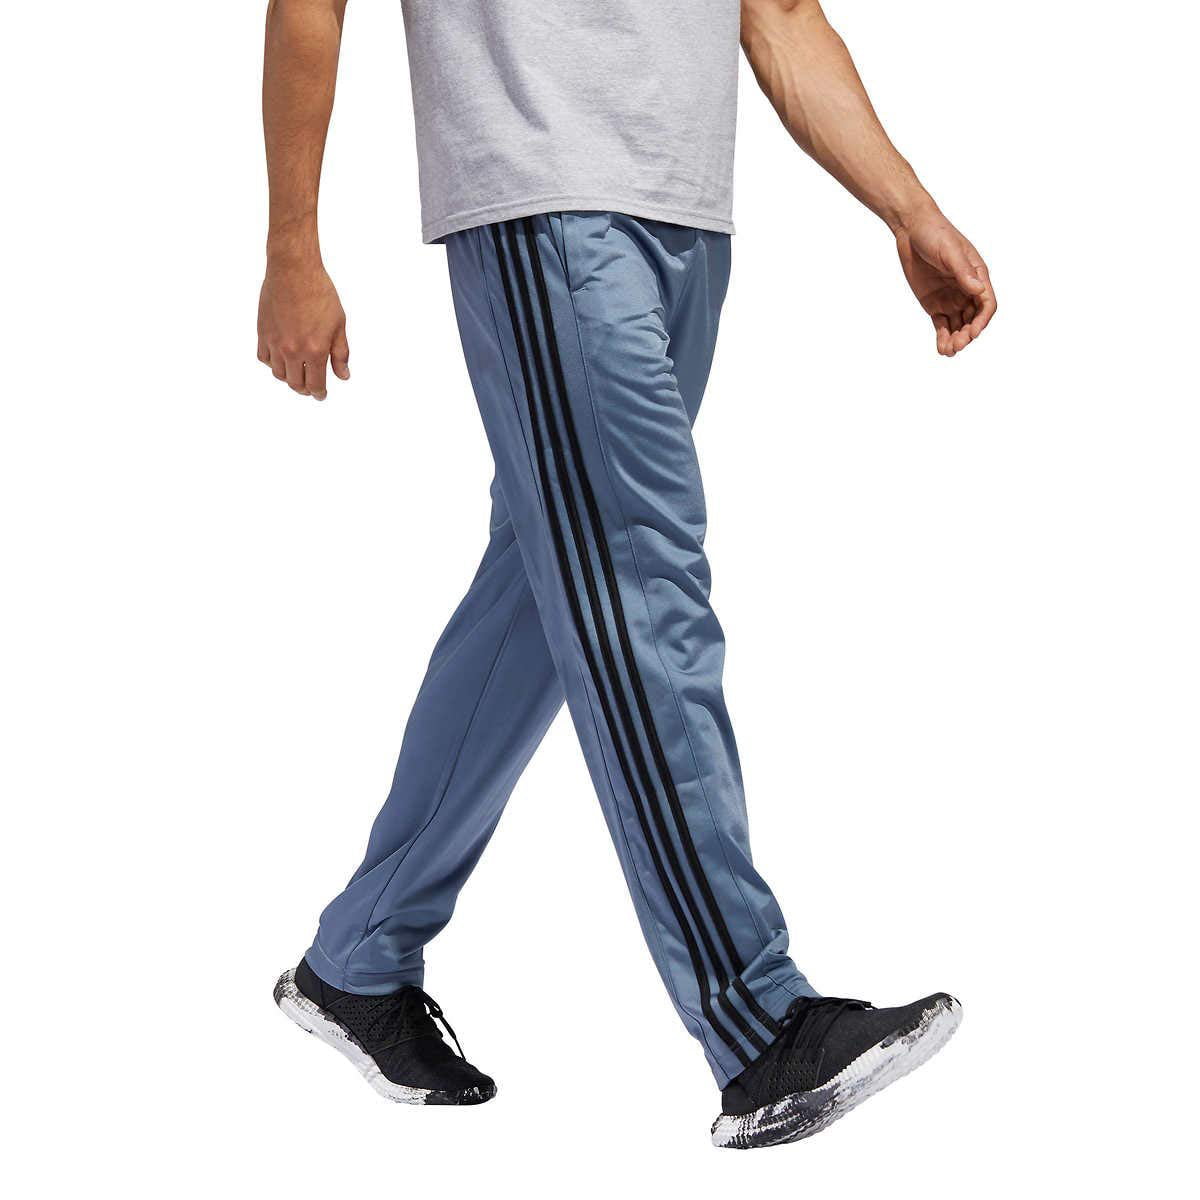 Adidas - adidas Men's Essential Track Pants Gameday Pant (Rawste Grey